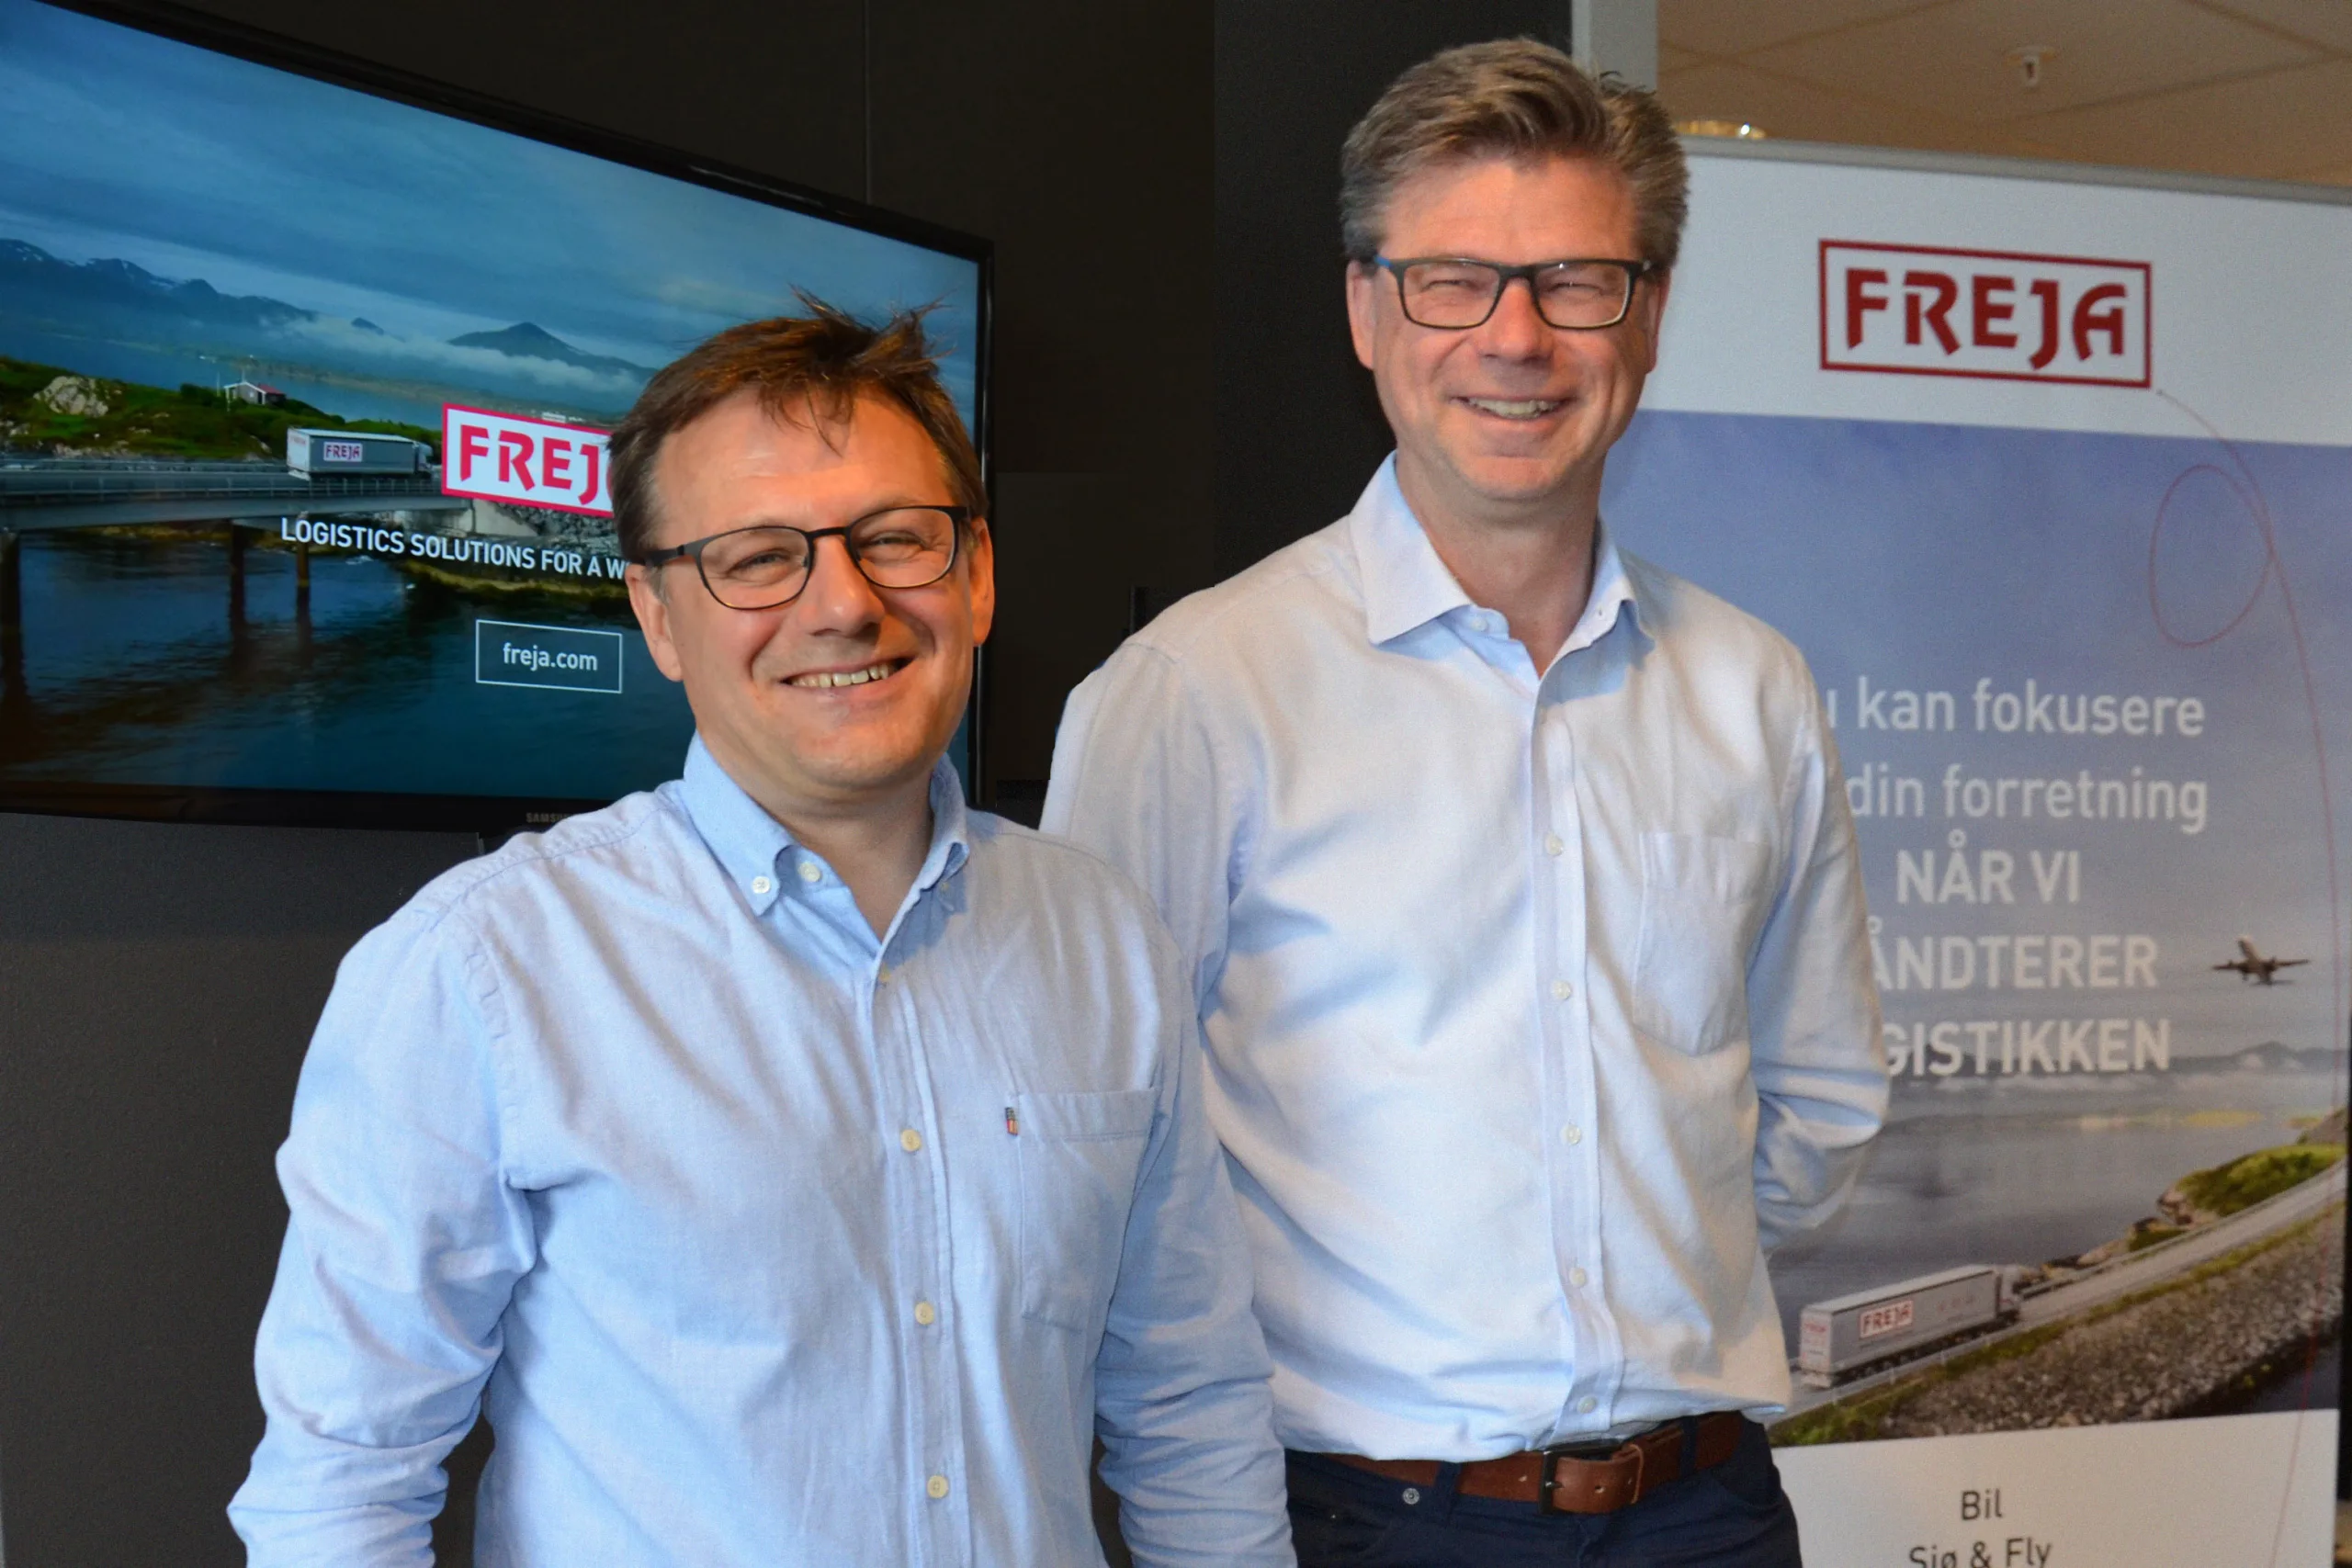 The development at FREJA Ålesund gives Managing Director, Kjell-Arne Eloranta, and Region Director, Stein Waagan, every reason to smile.